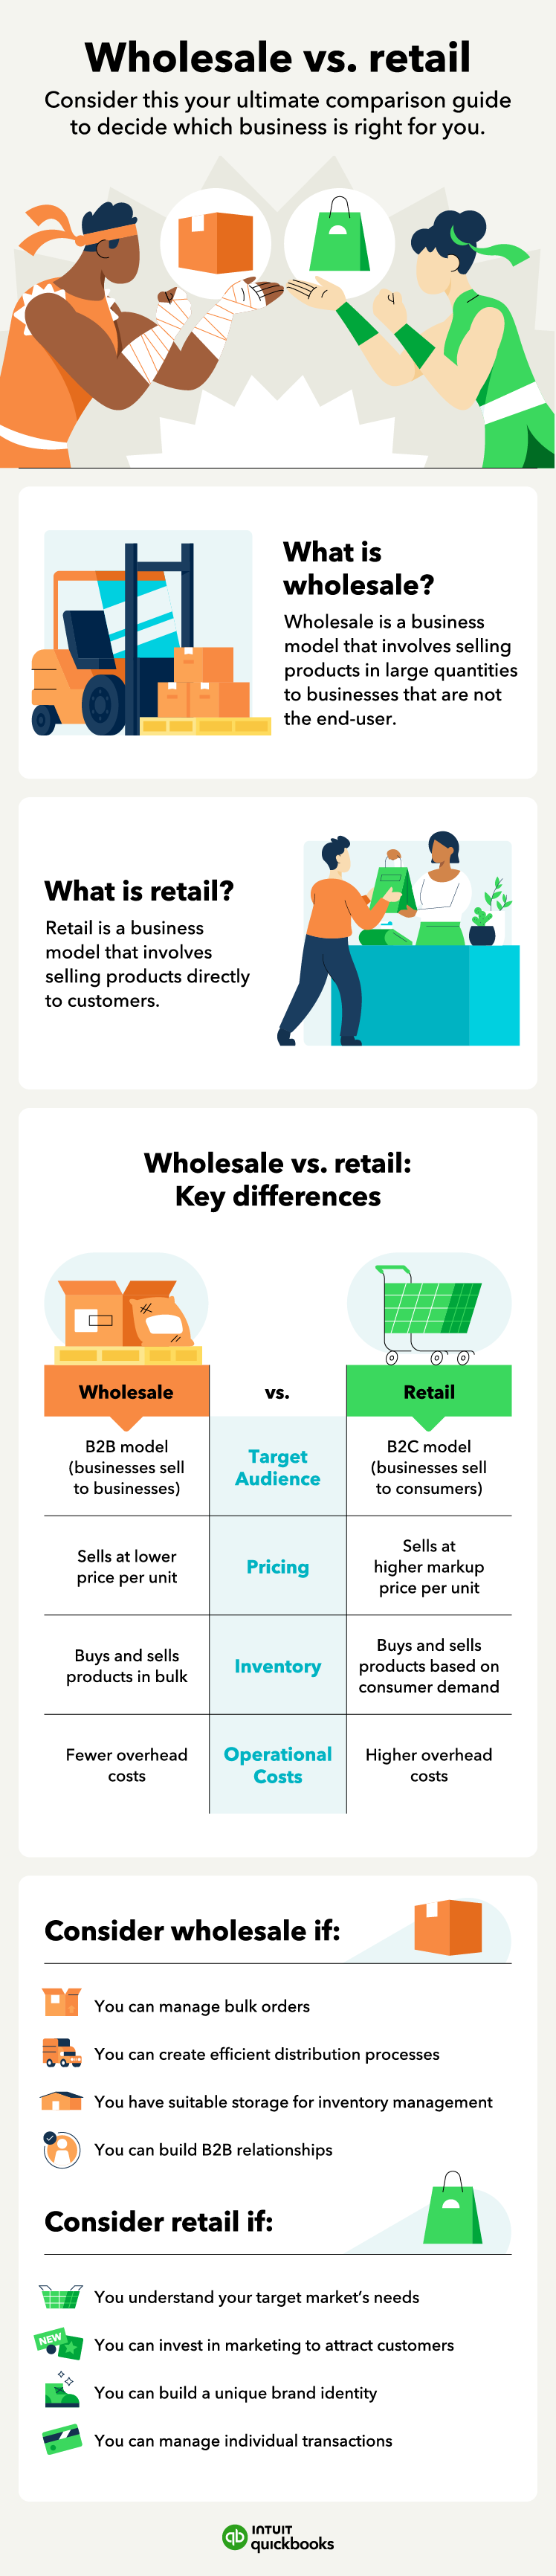 Wholesales vs. retail infographic